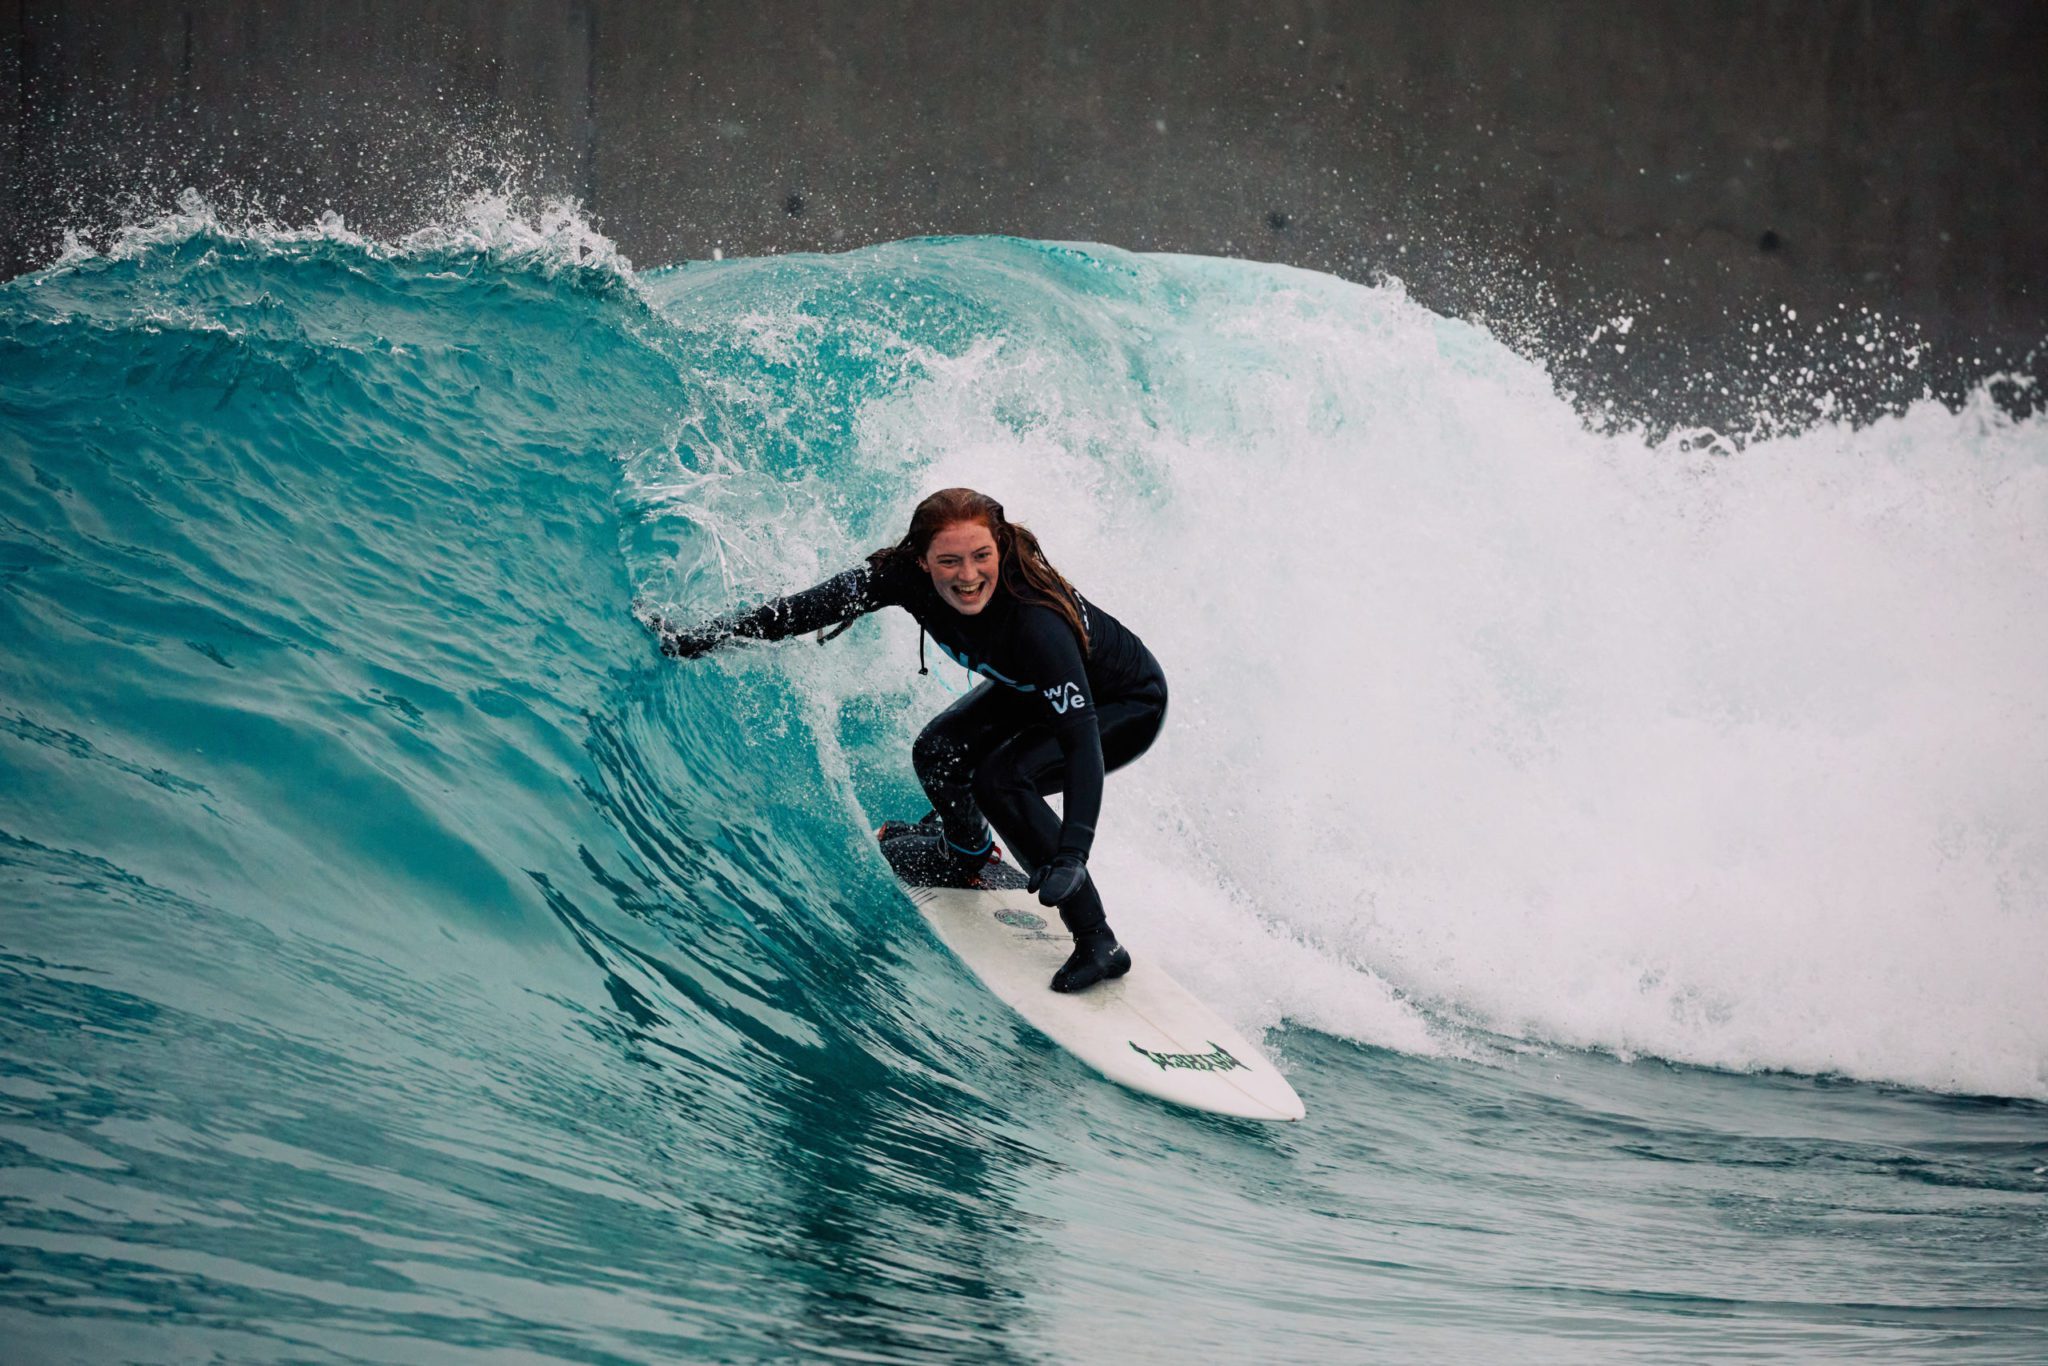 Woman enjoying surfing at The Wave, surfing inland lake in Bristol